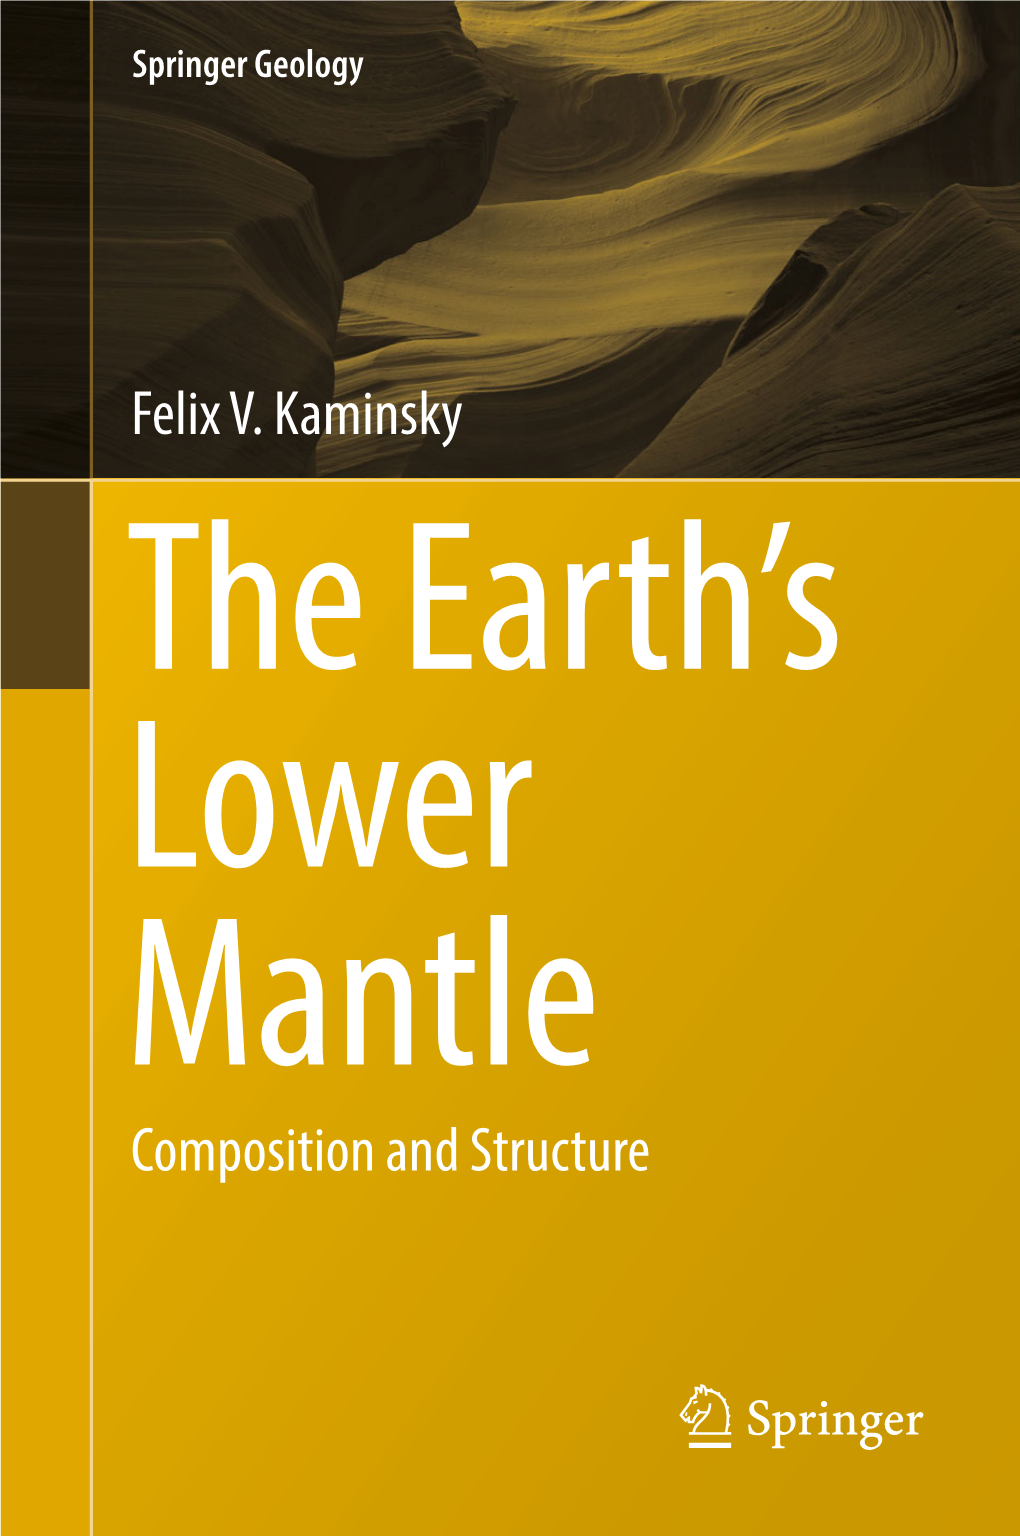 Felix V. Kaminsky Composition and Structure